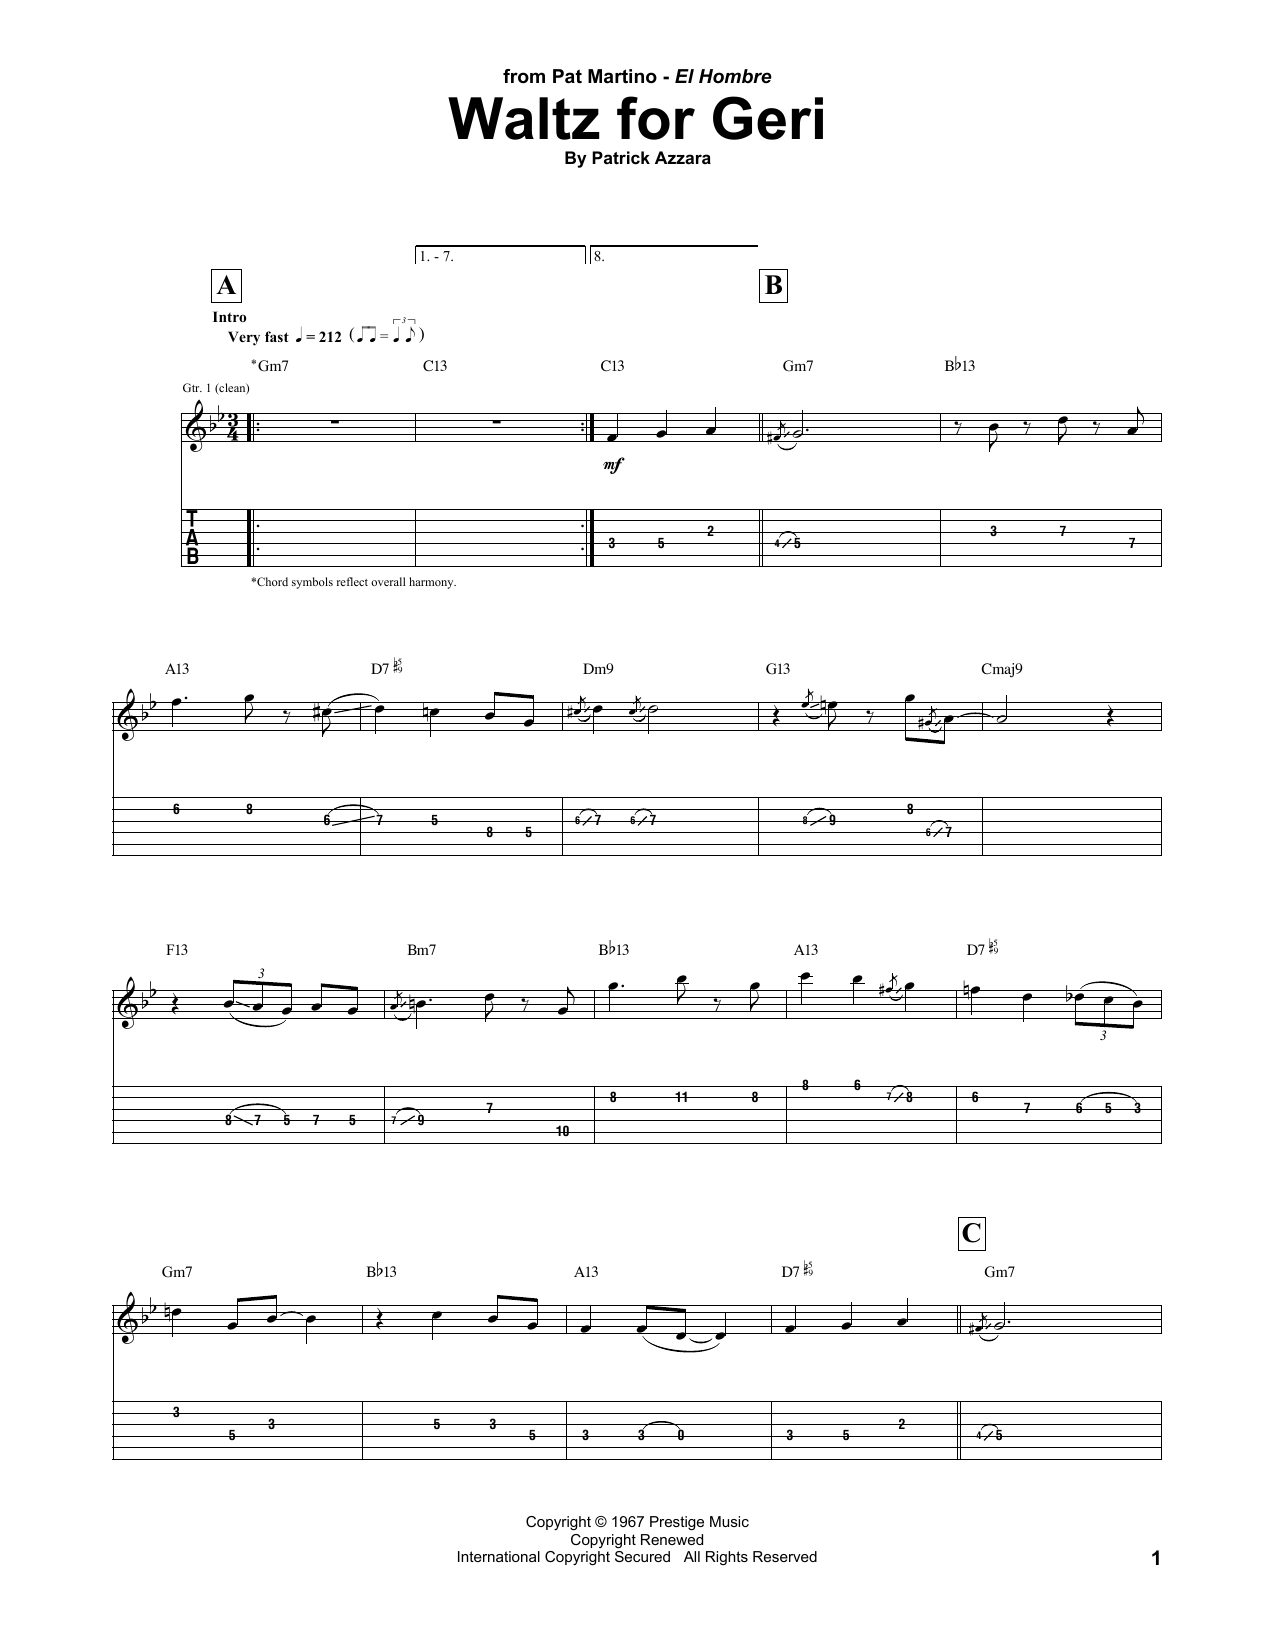 Pat Martino Waltz For Geri Sheet Music Notes & Chords for Guitar Tab - Download or Print PDF